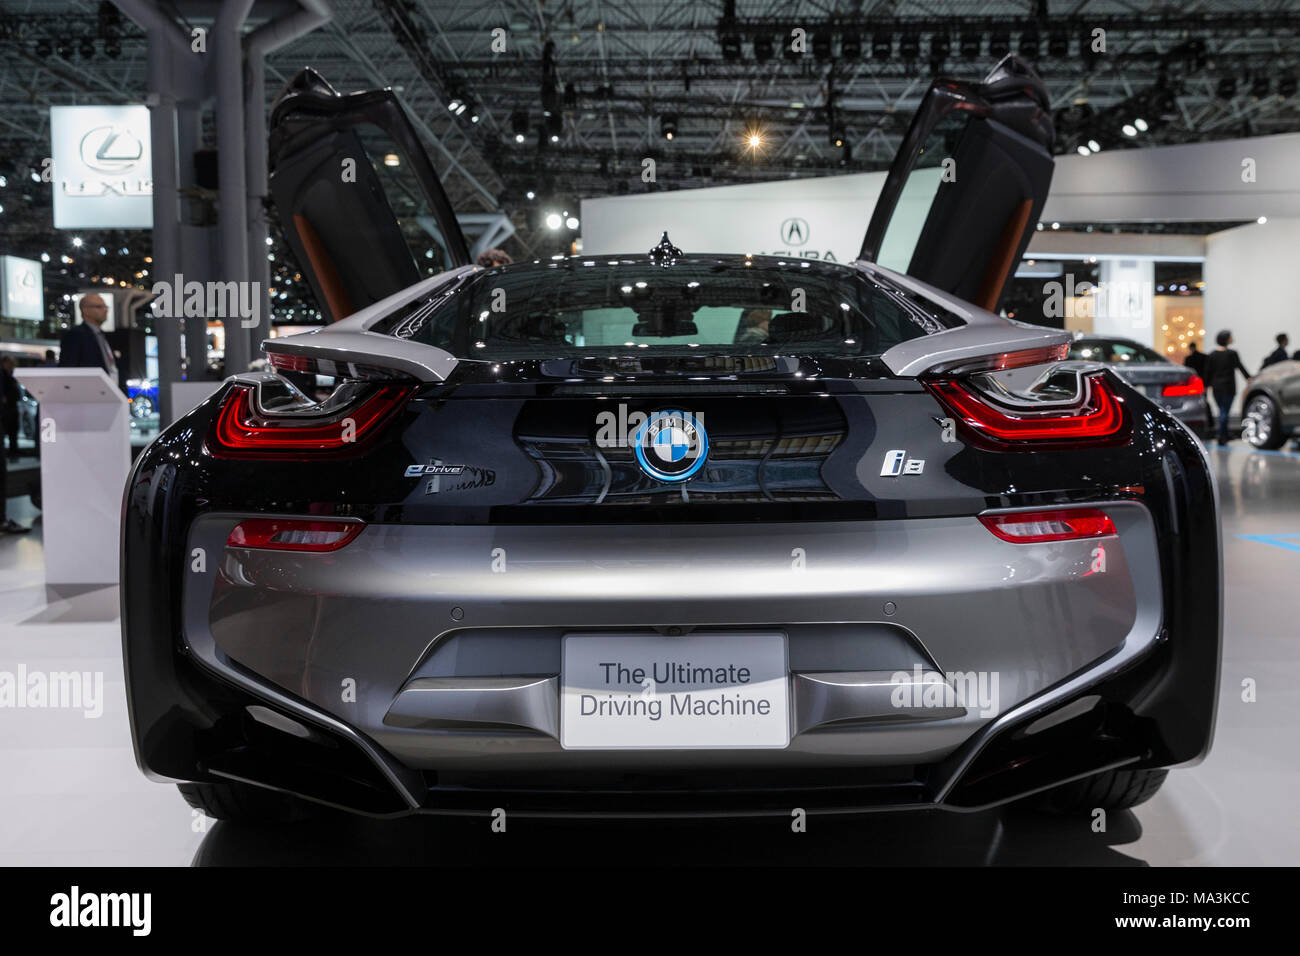 New York, NY - March 29, 2018: BMW edrive i8 coupe on display at 2018 New  York International Auto Show at Jacob Javits Center Credit: lev radin/Alamy  Live News Stock Photo - Alamy